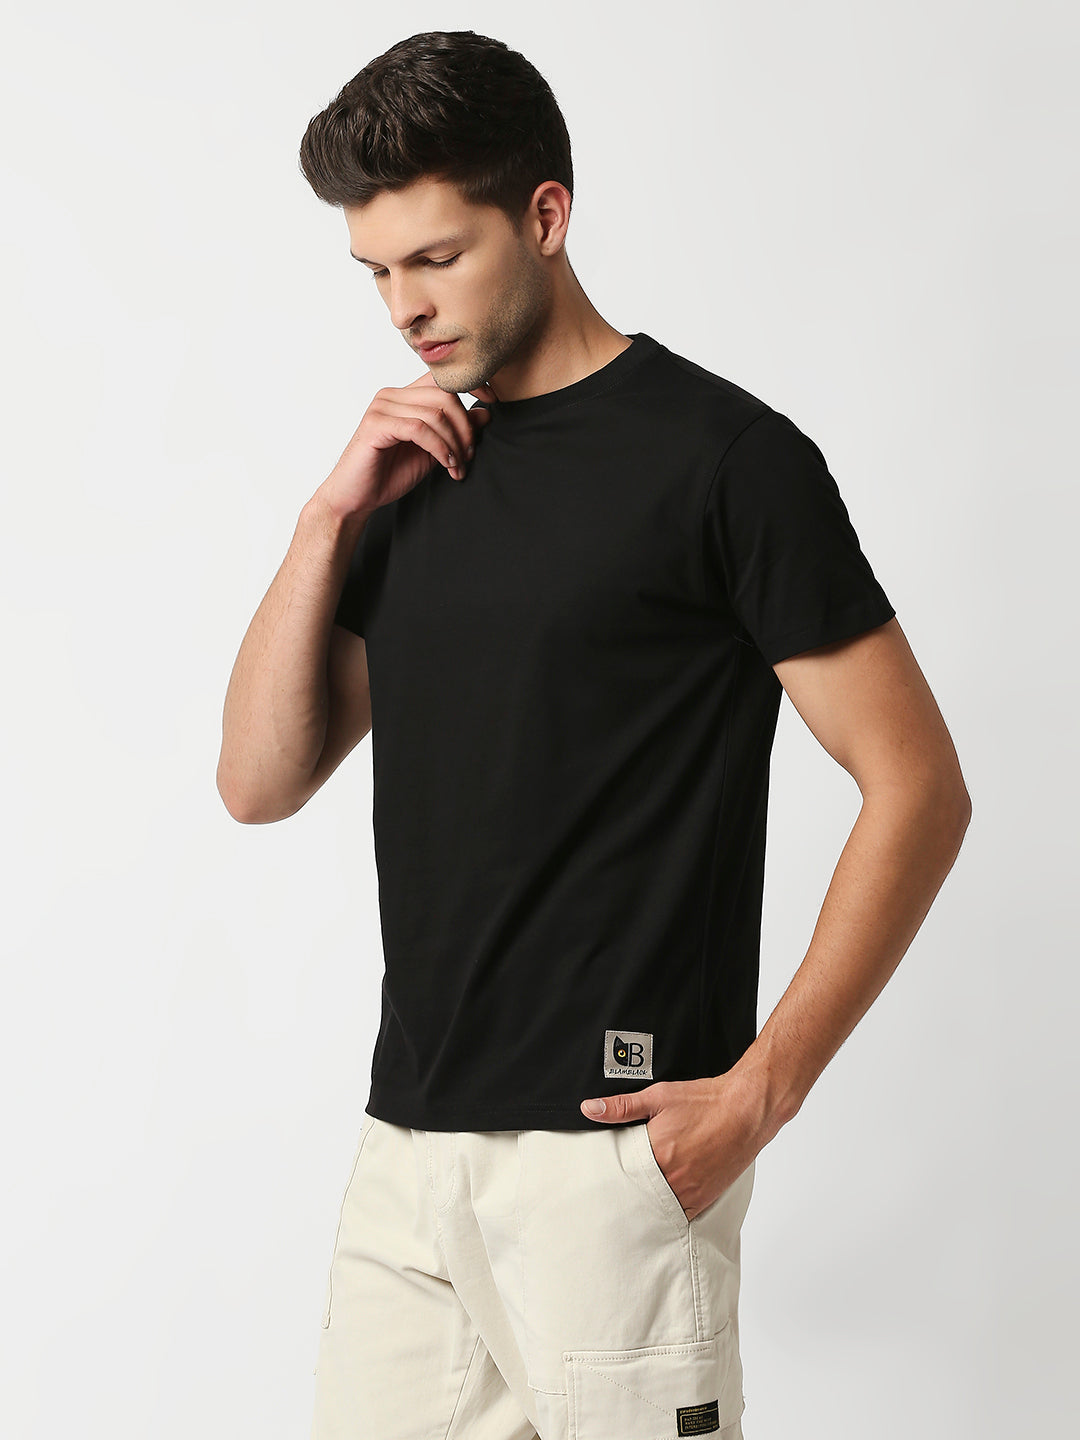 Shop Blamblack Men's Black Color Plain T Shirt Online – BlamBlack